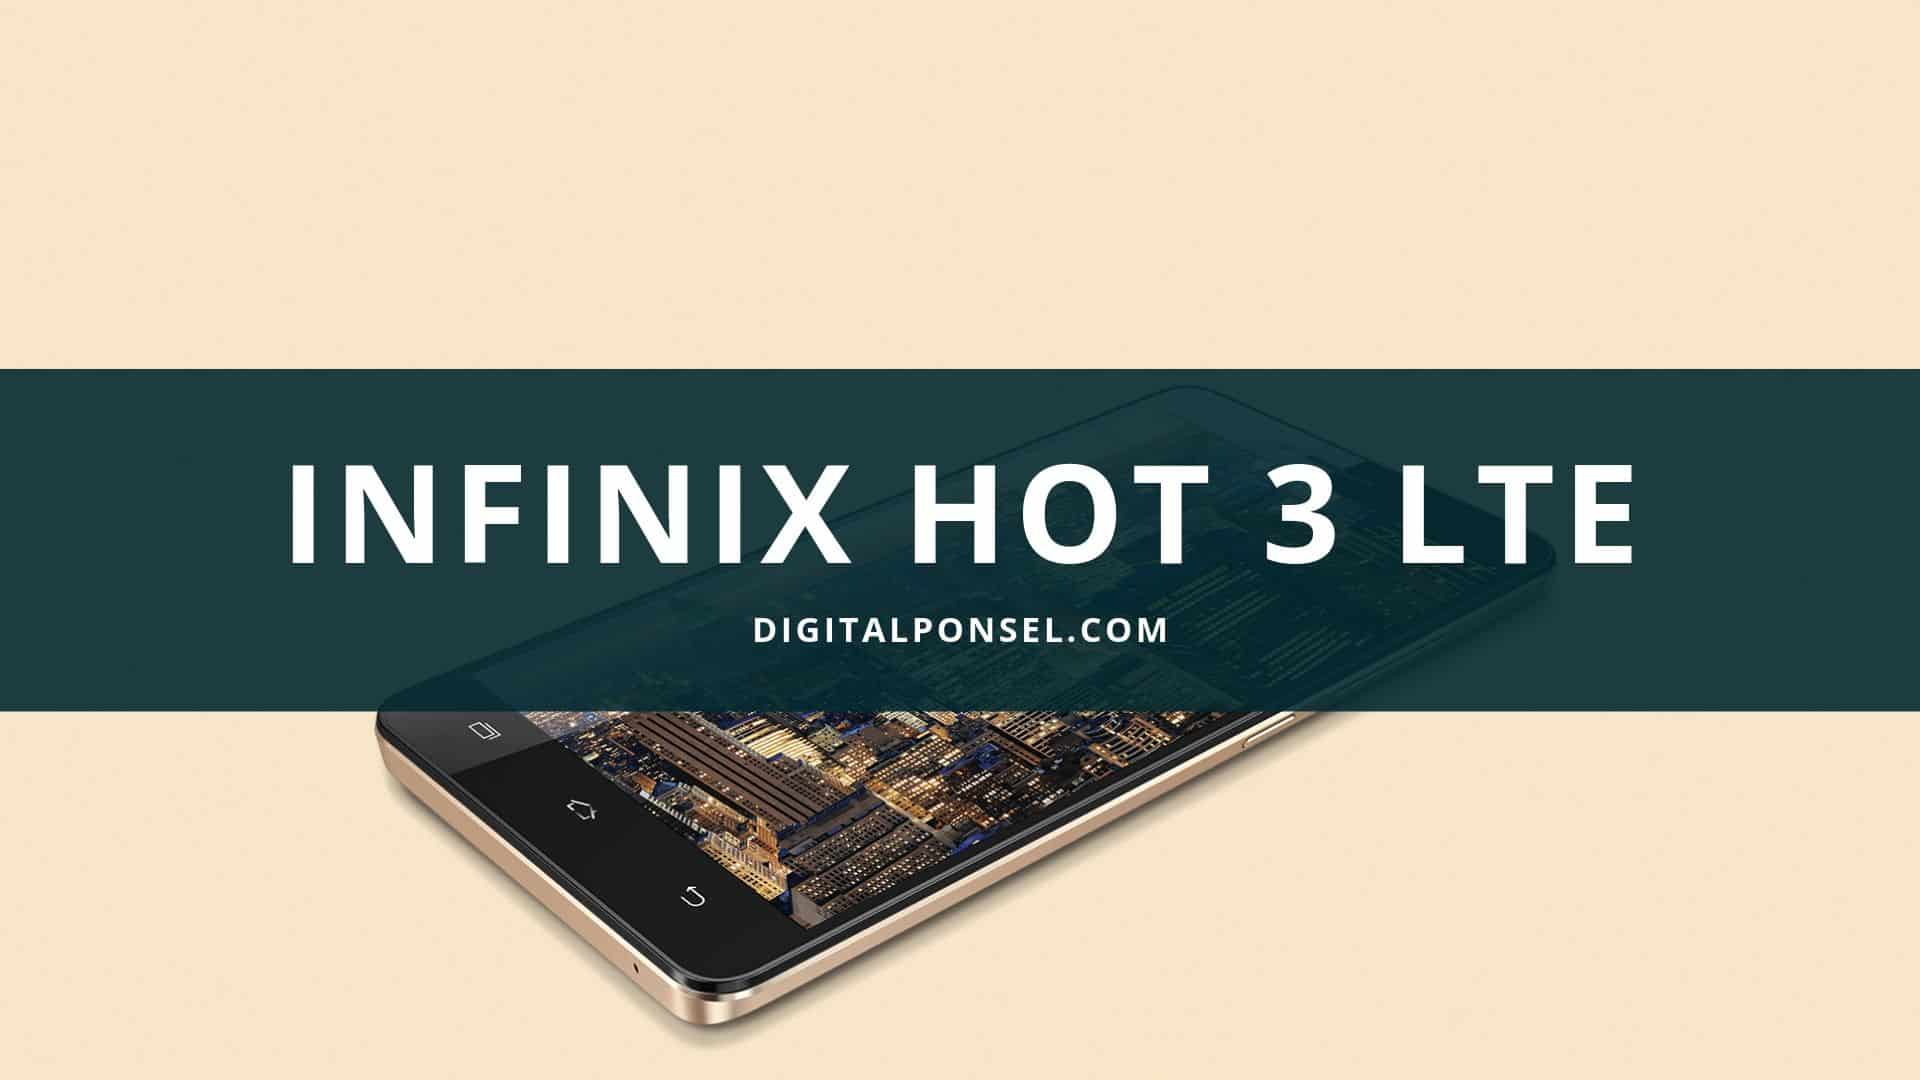 Infinix Hot 3 LTE